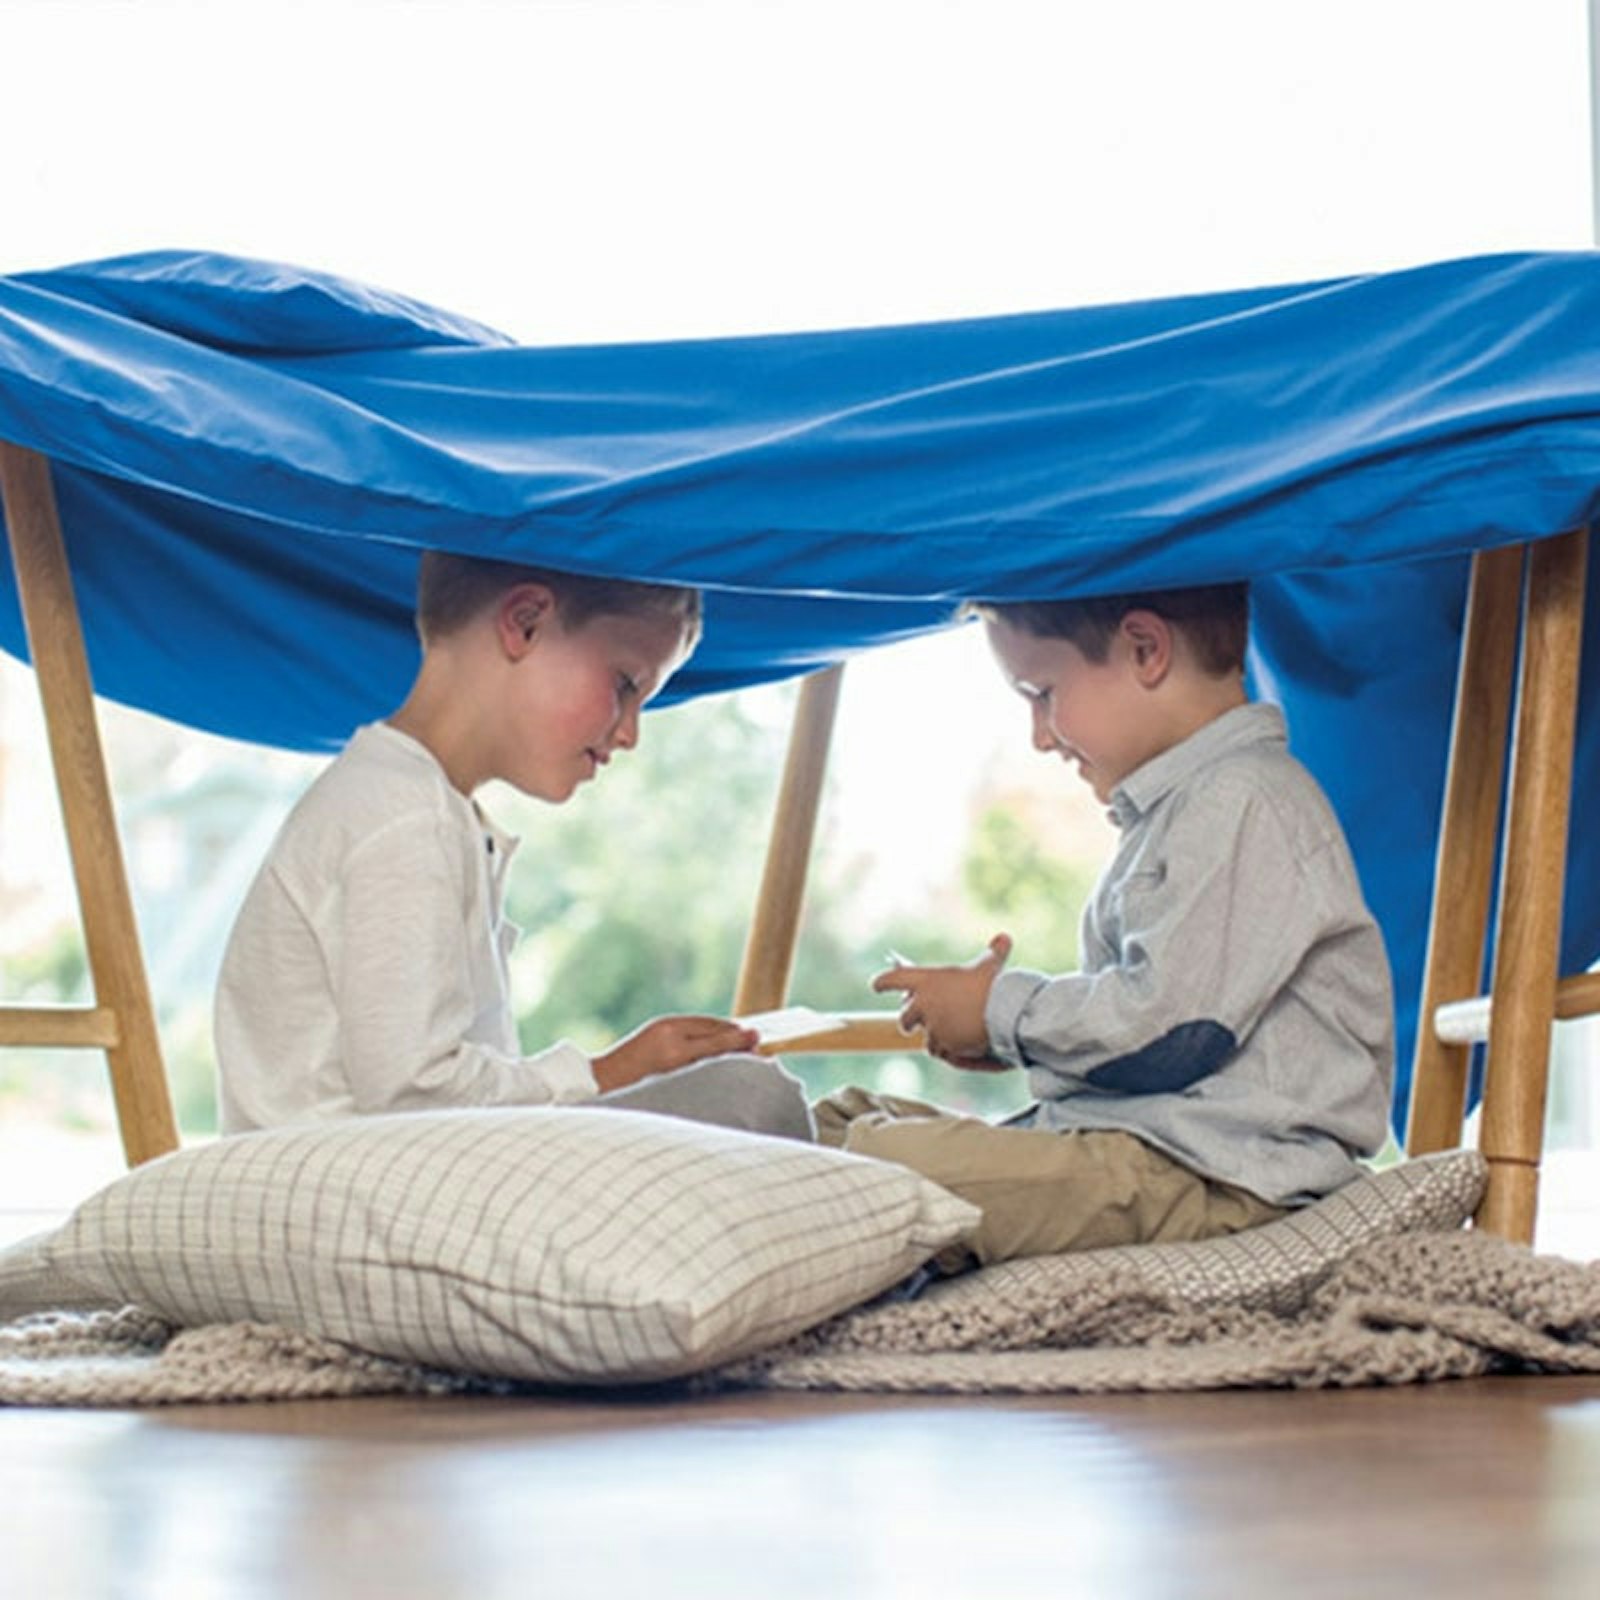 teaser boys playing under blue sheet